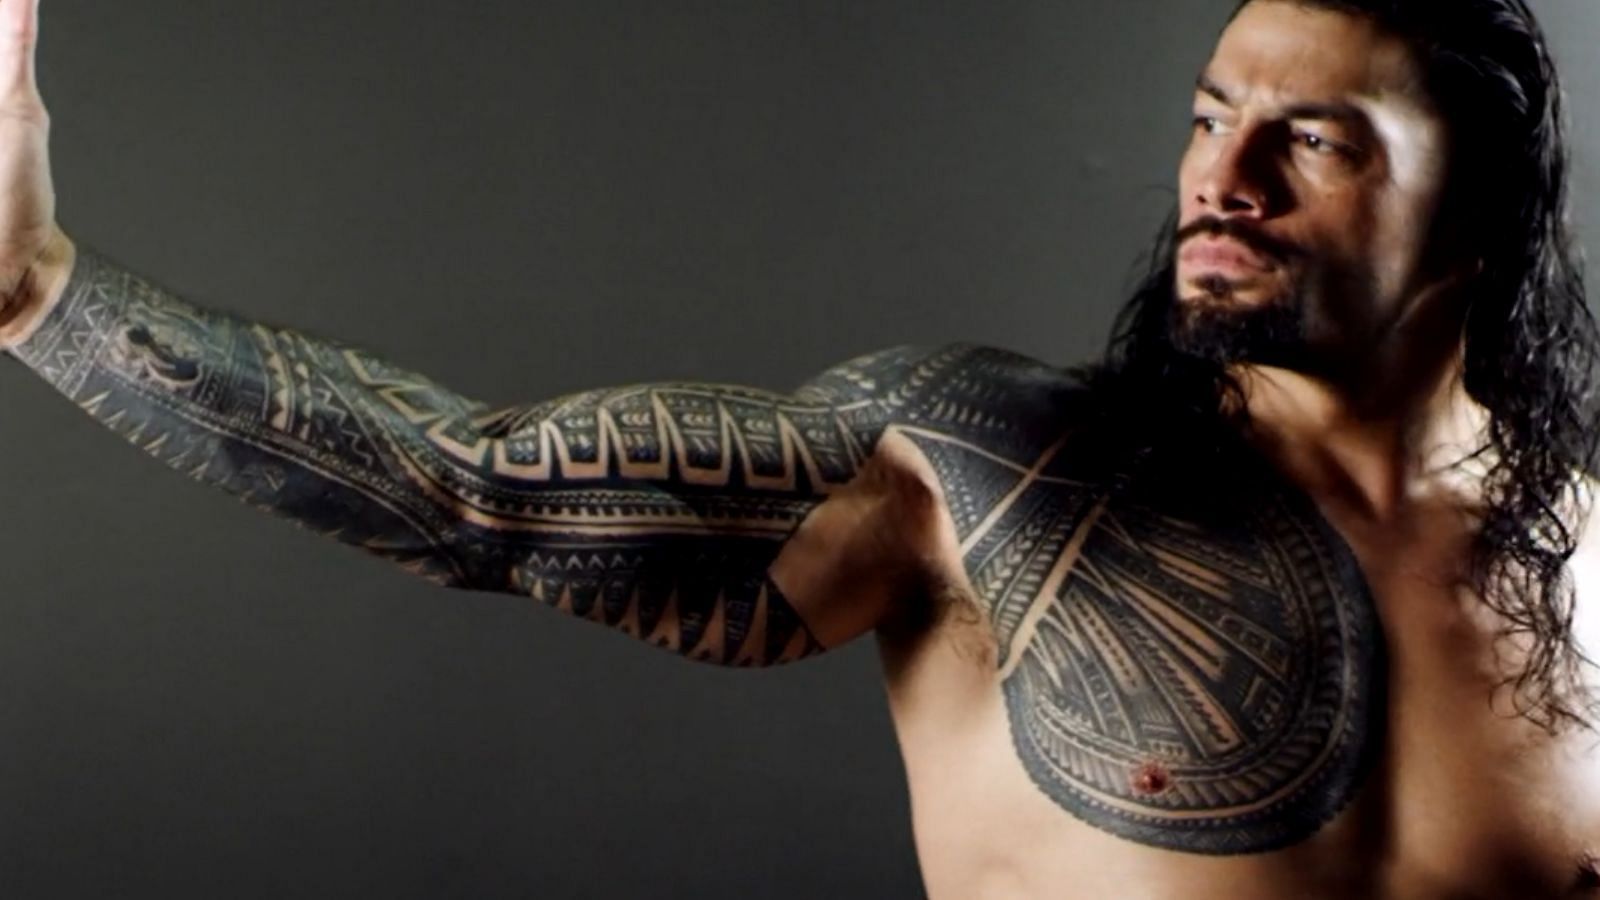 Who is Roman Reigns' tattoo artist?